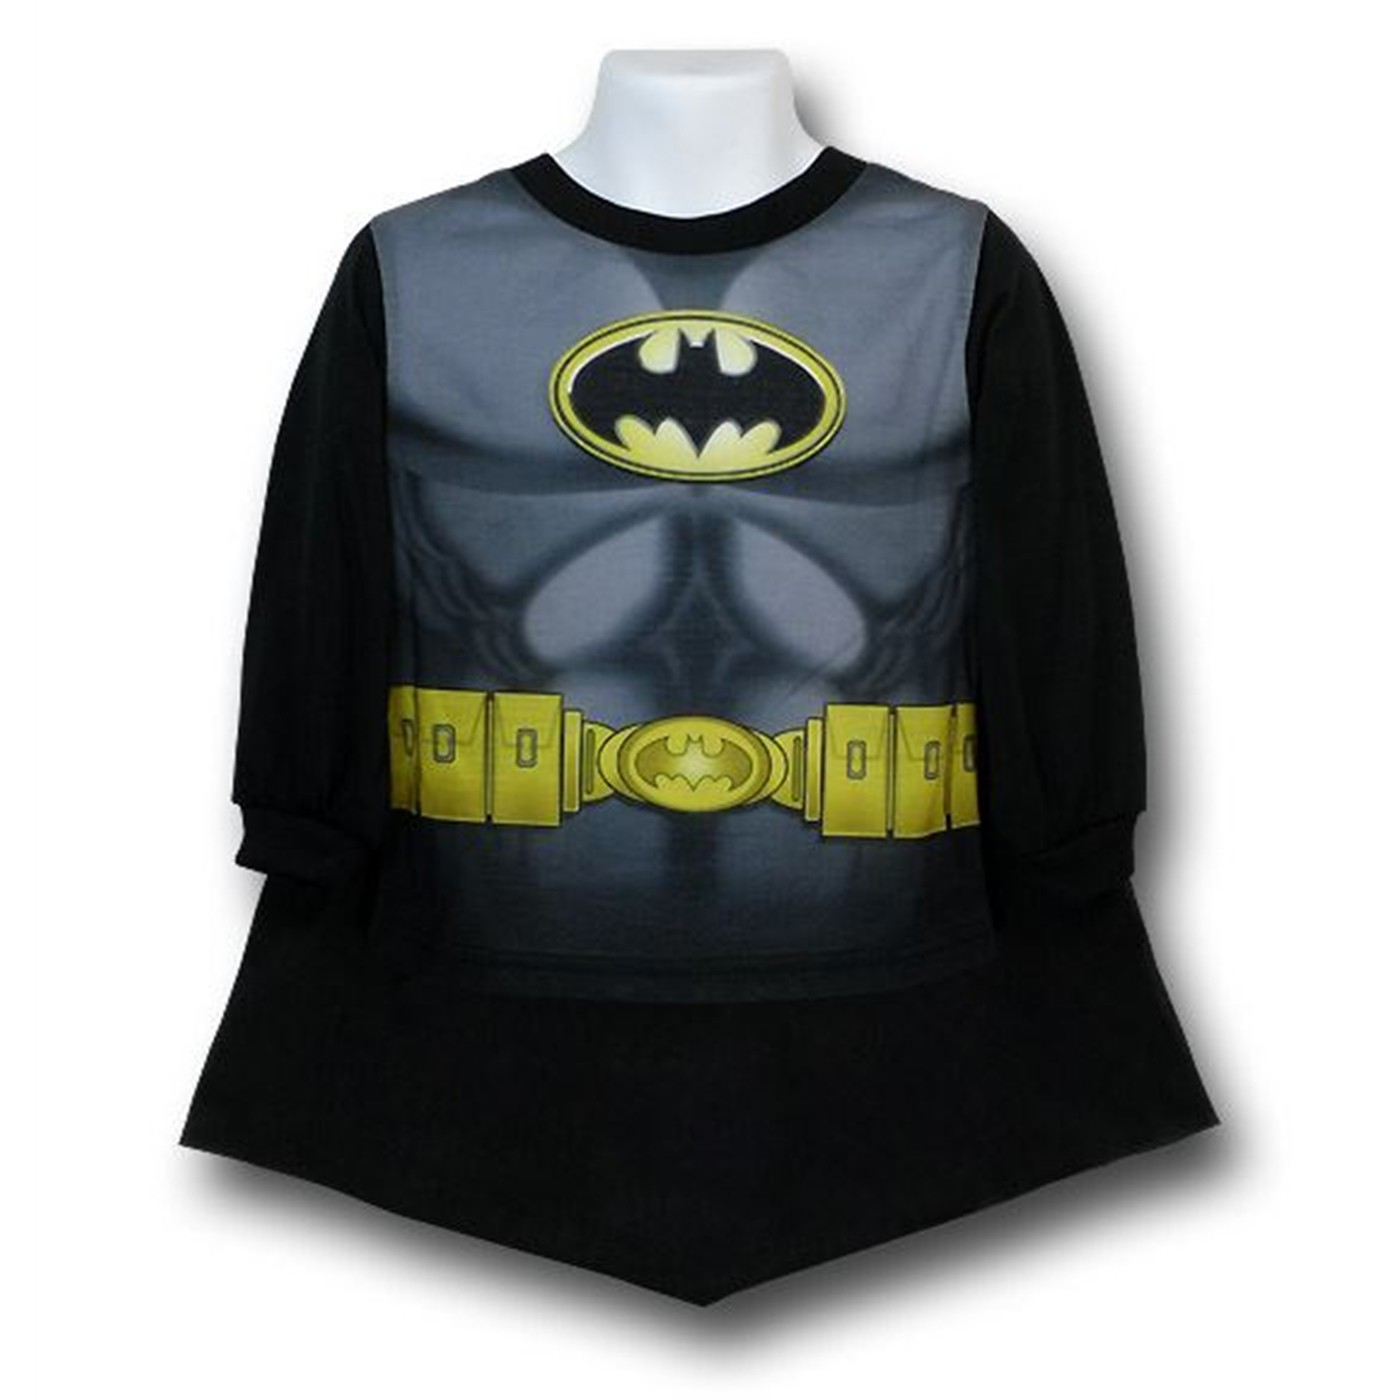 Batman Kids Uniform w/Cape Pajama Set